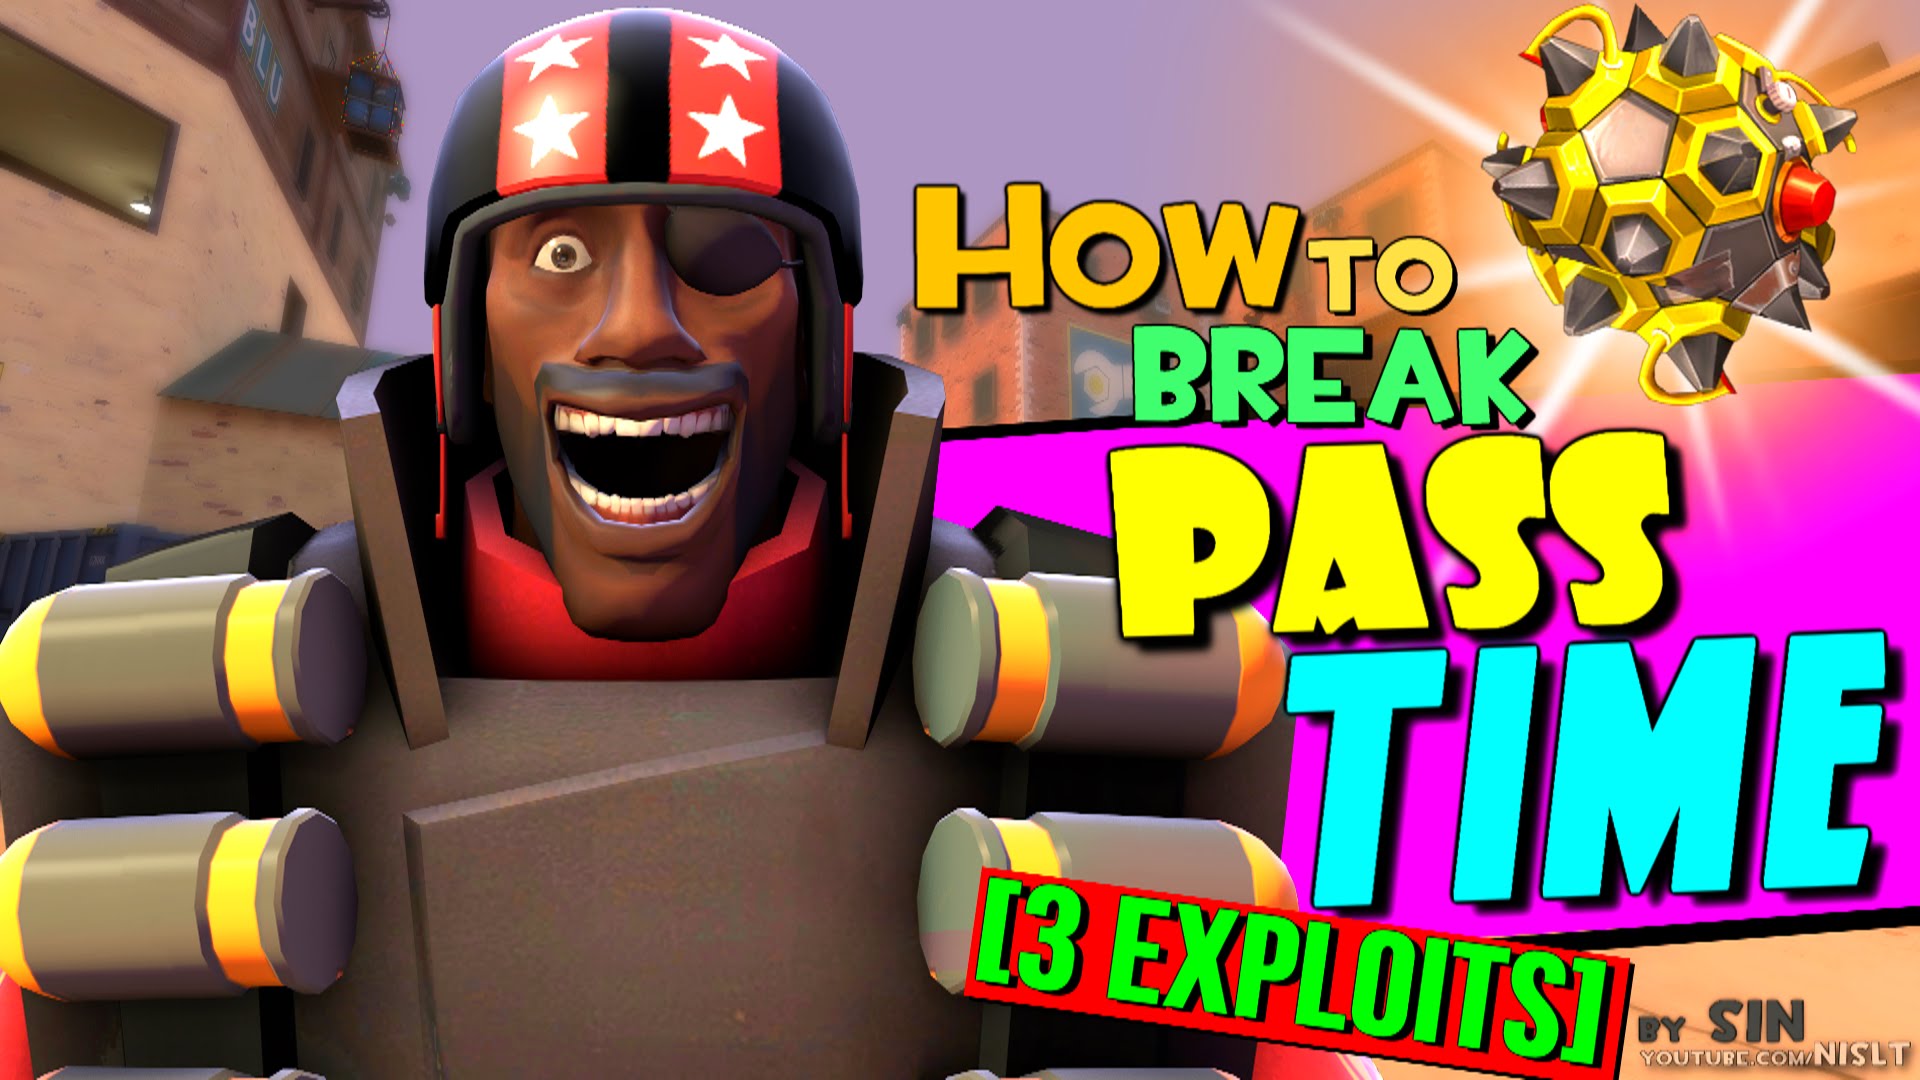 TF2: How to break PASS Time [3 exploits] - YouTube